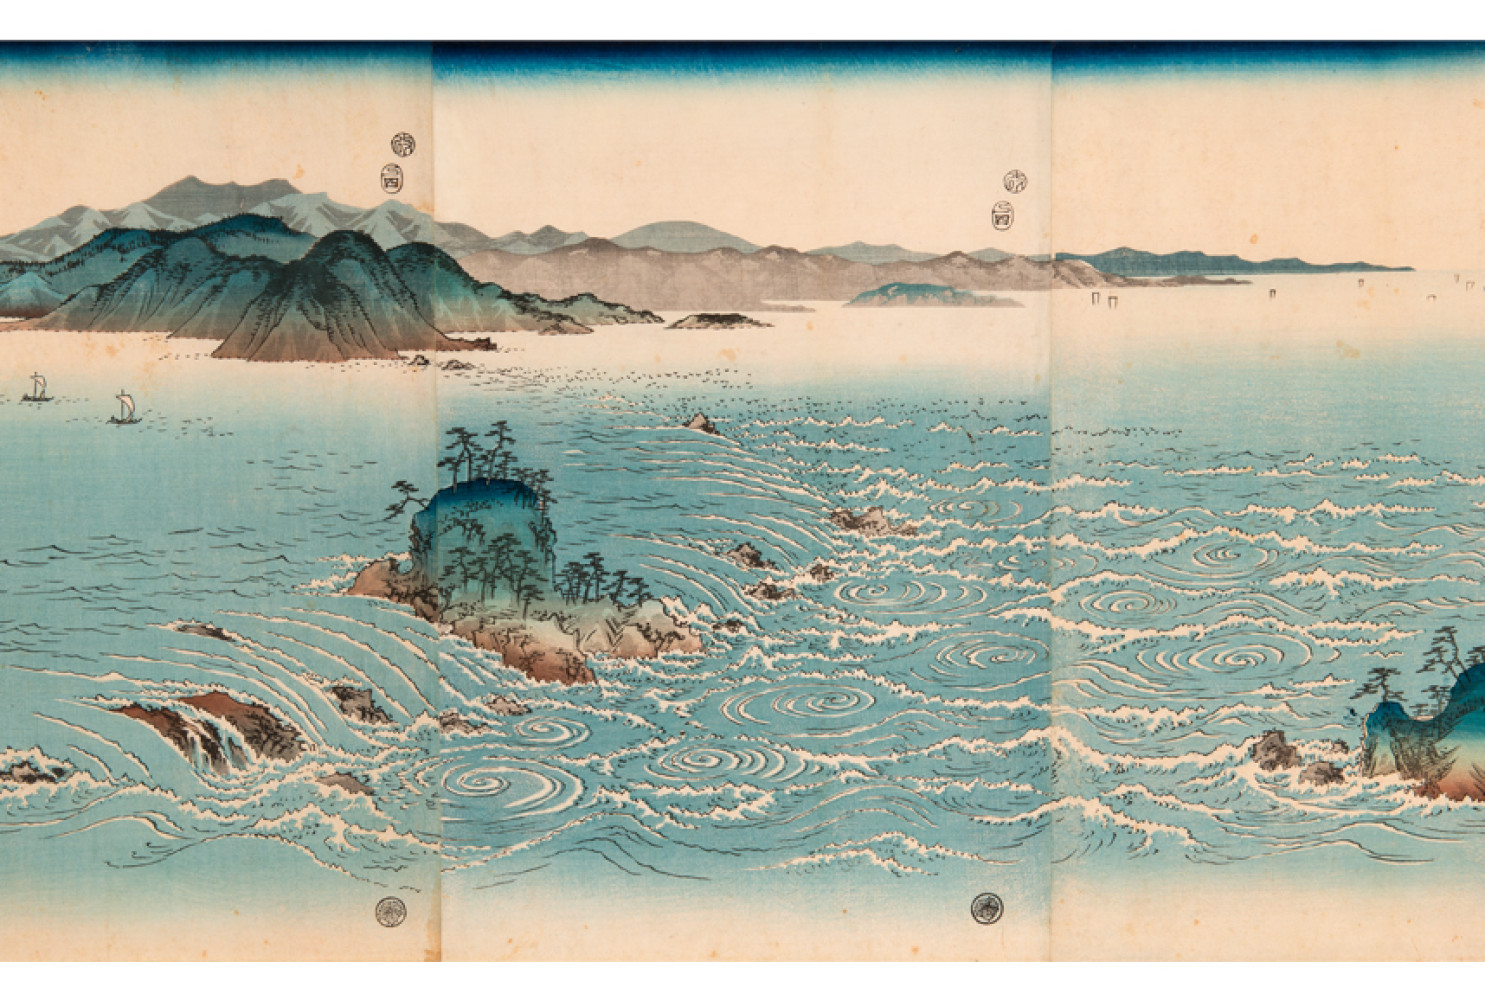 The Whirlpools of Naruto in Awa, 4/1857. by Utagawa Hiroshige (Japanese, 1797-1858). Color woodblock print. 1948.004.0014.001-3